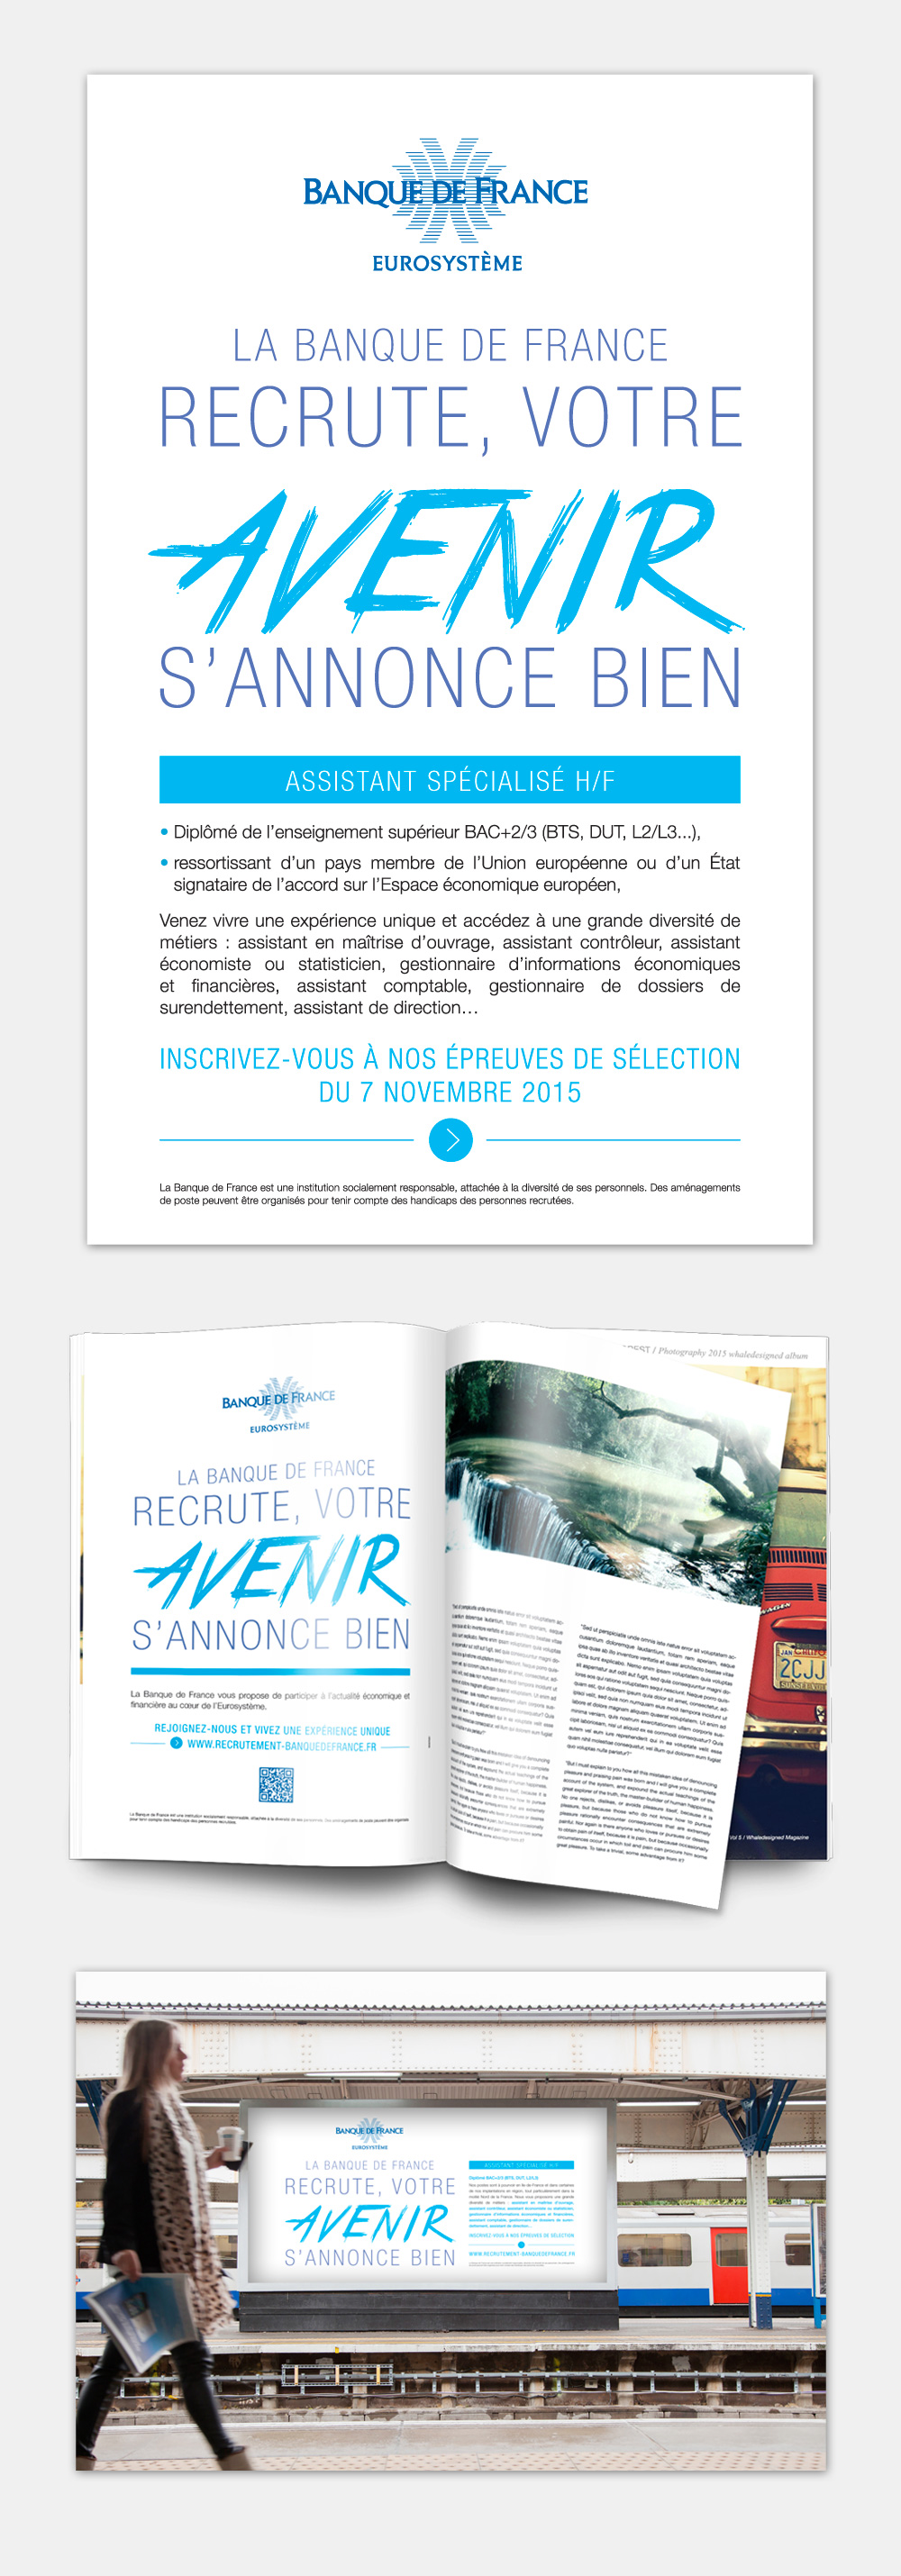 Media Sourcing | Banque de France